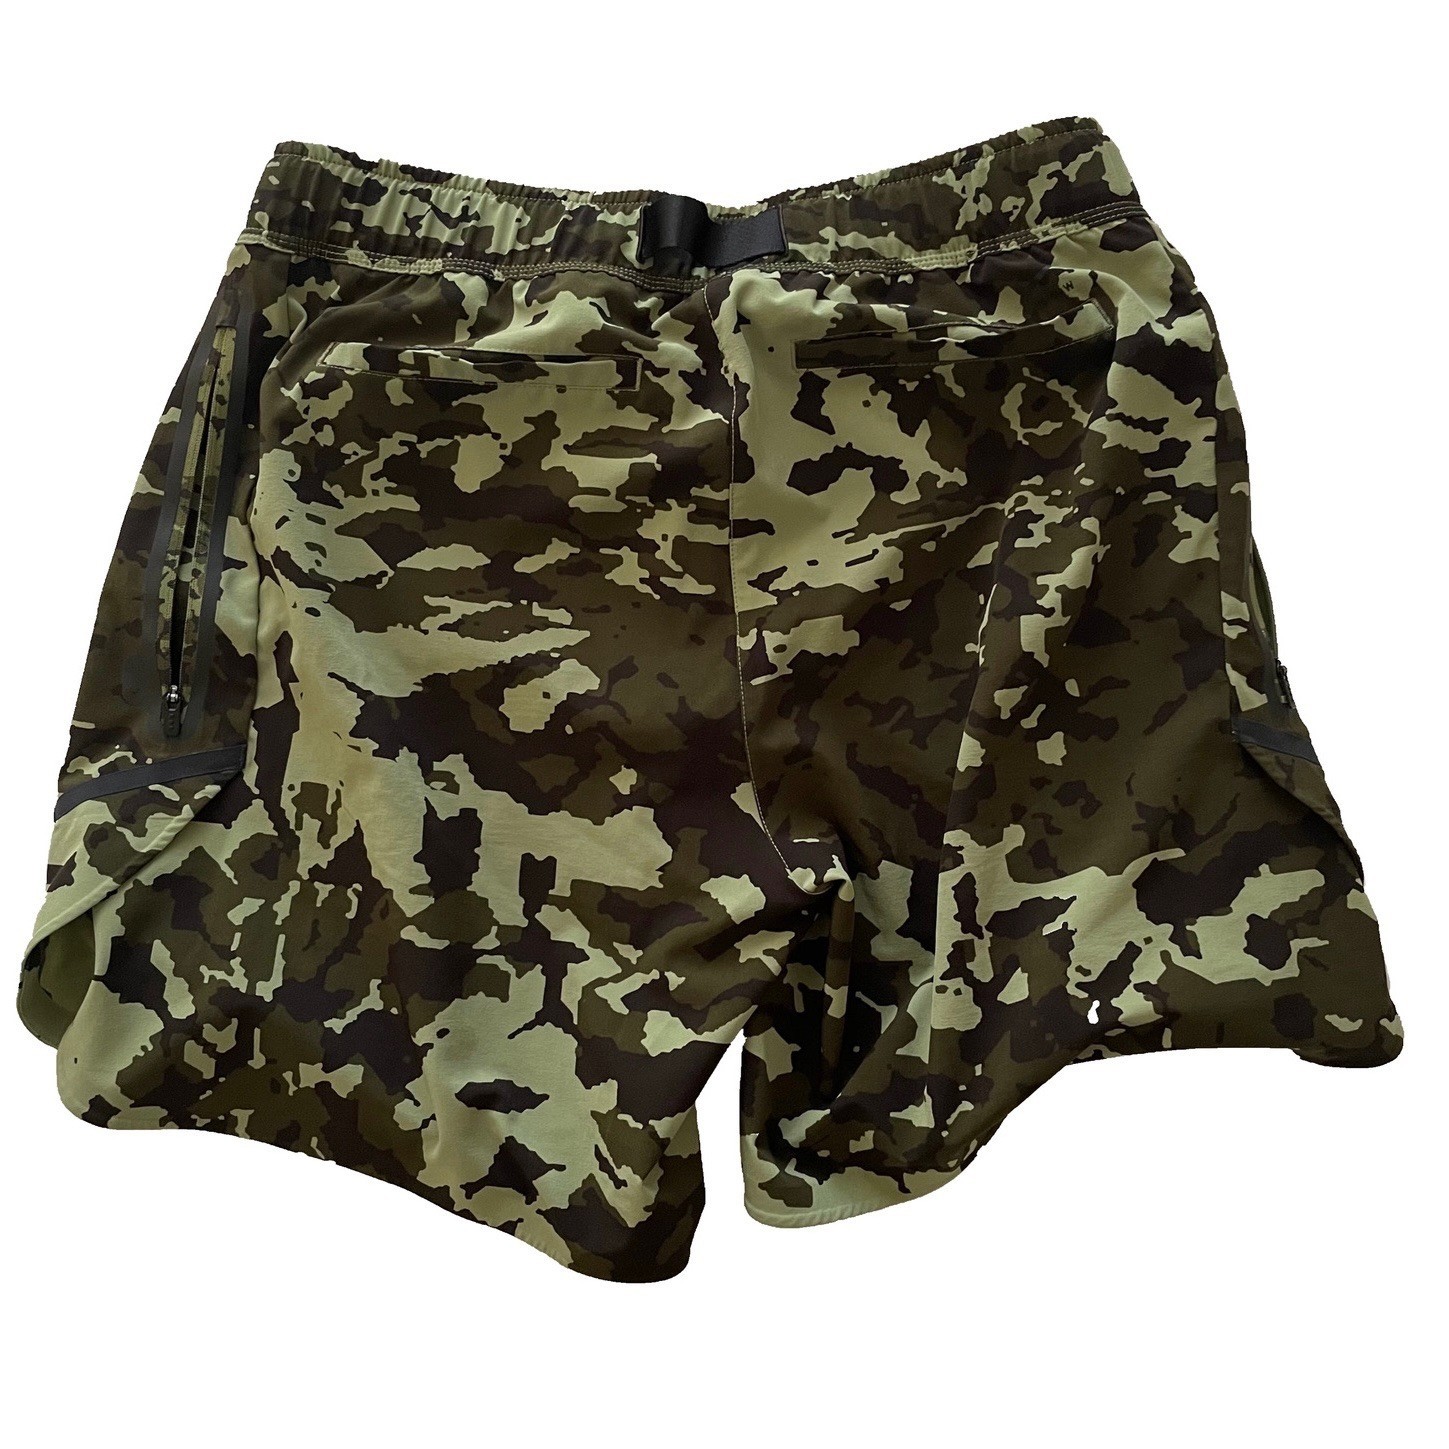 MMW camo shorts - 2